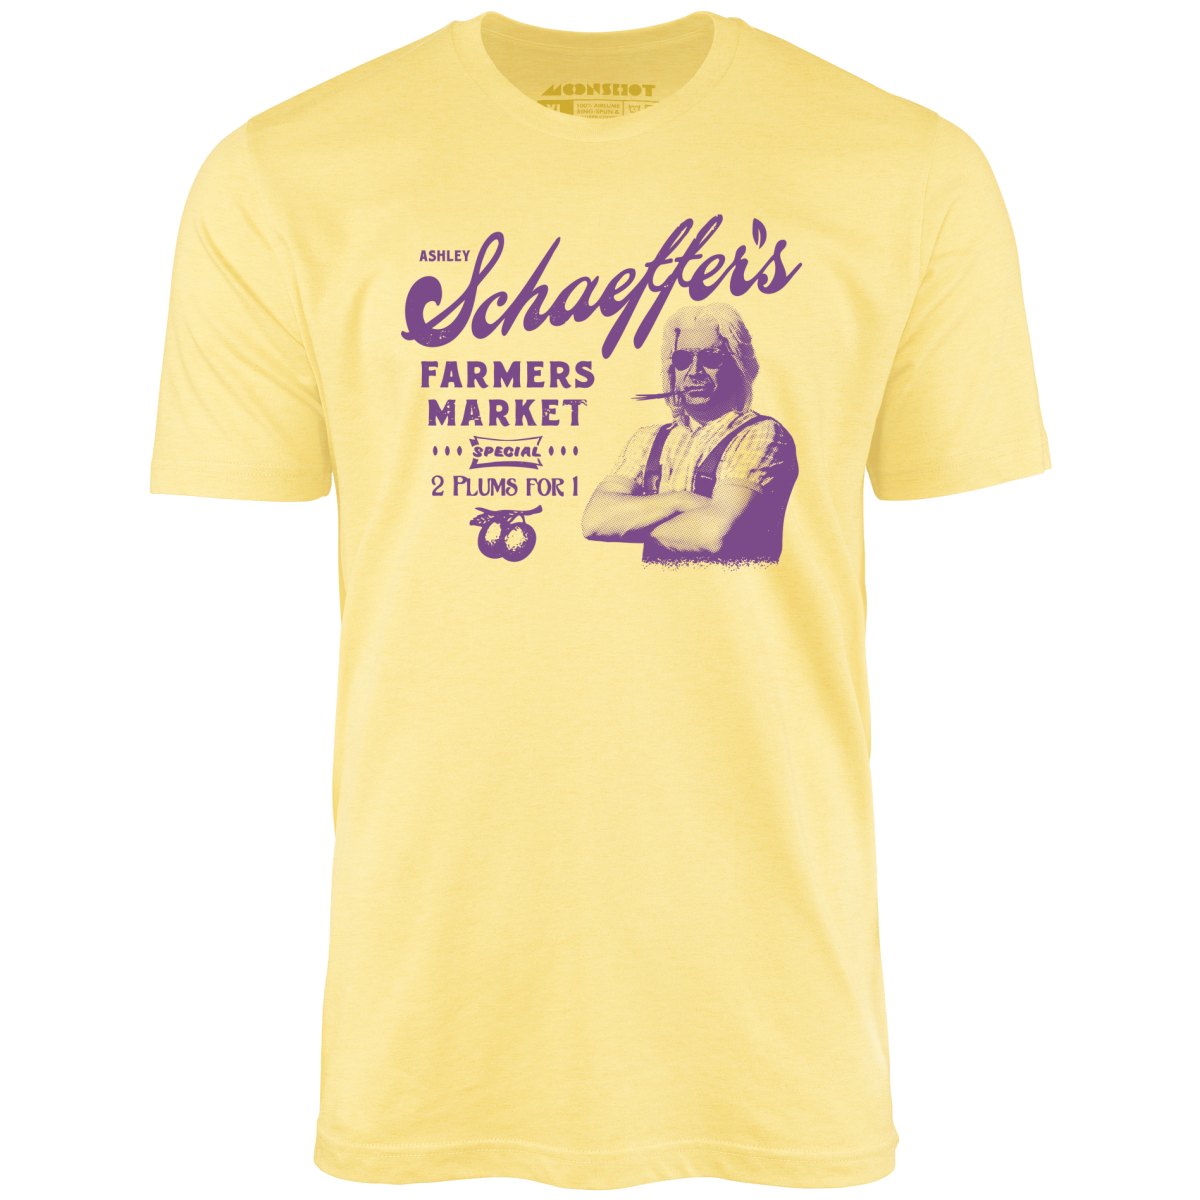 Ashley Schaeffer's Farmers Market - Unisex T-Shirt